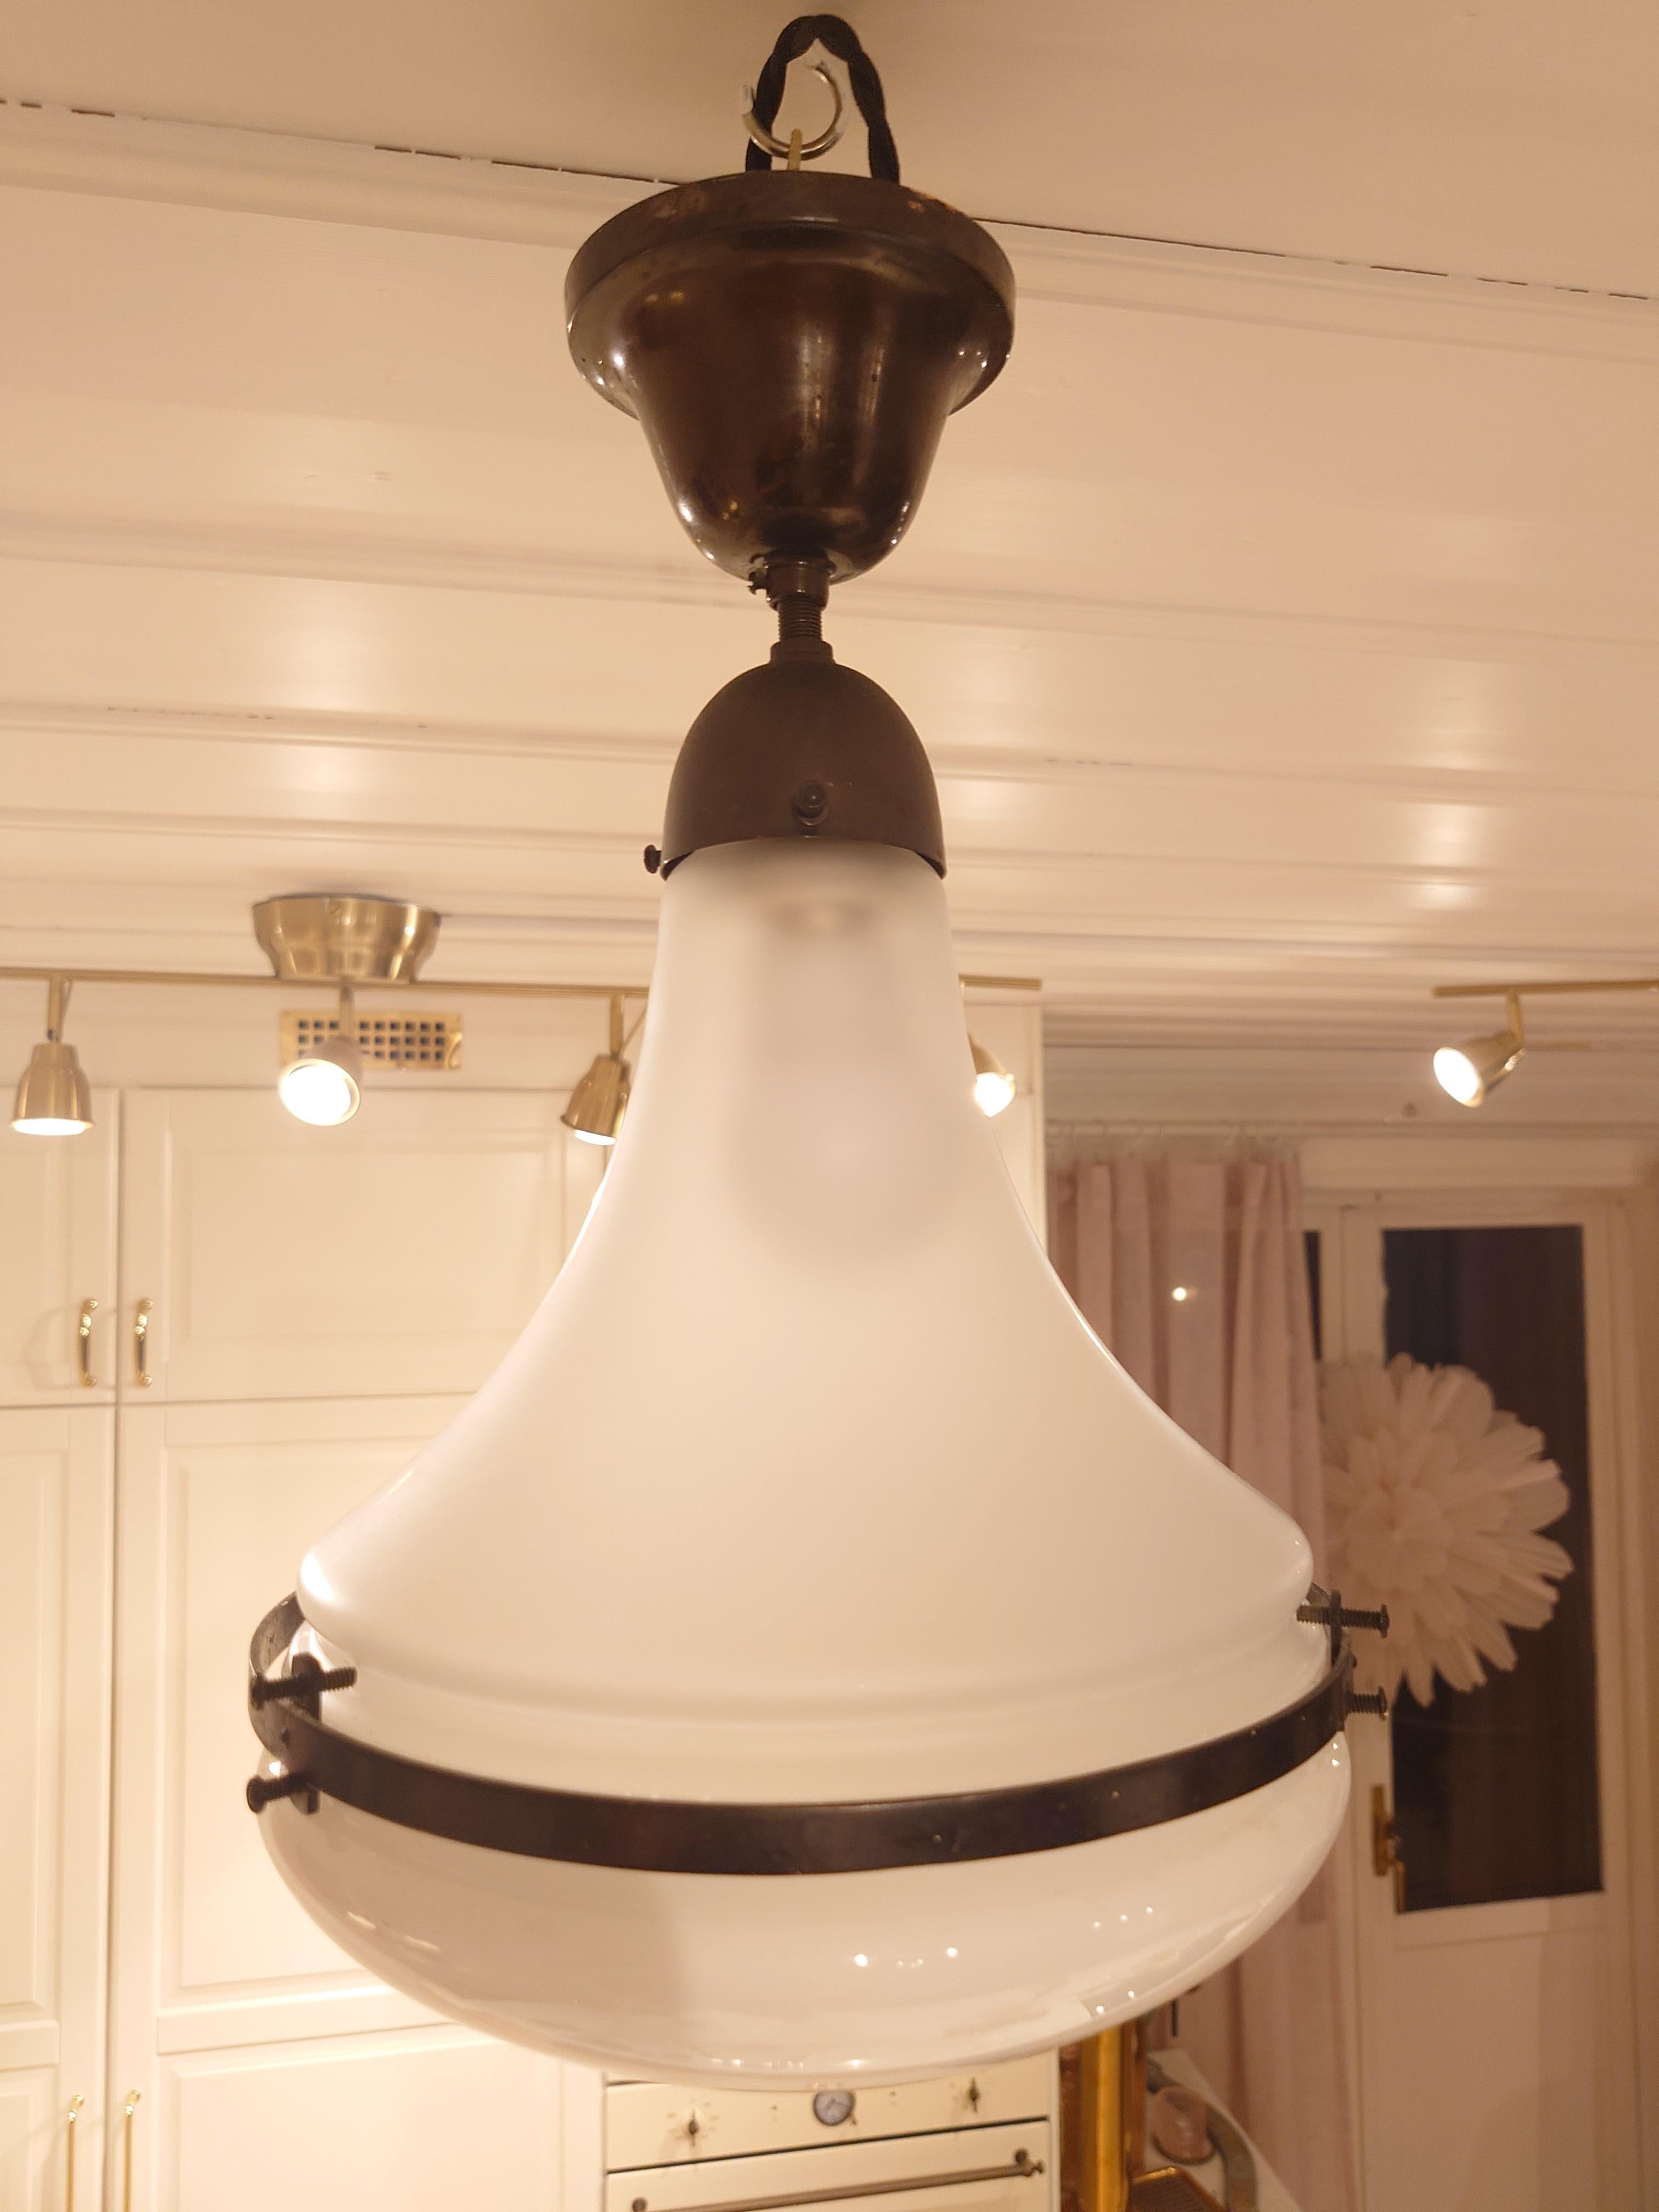 German Art Nouveau Jugendstil Siemens Luzette Pendant Lamp by Peter Behrens In Good Condition For Sale In Boden, SE